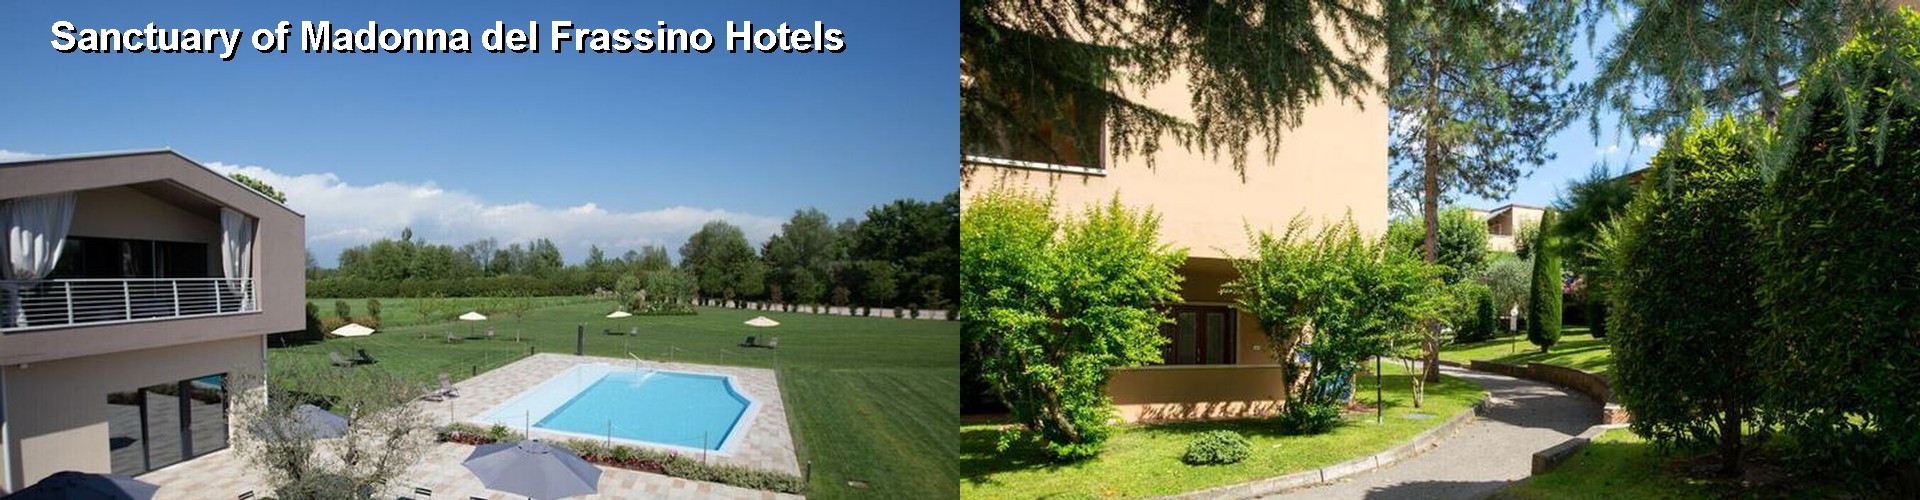 5 Best Hotels near Sanctuary of Madonna del Frassino